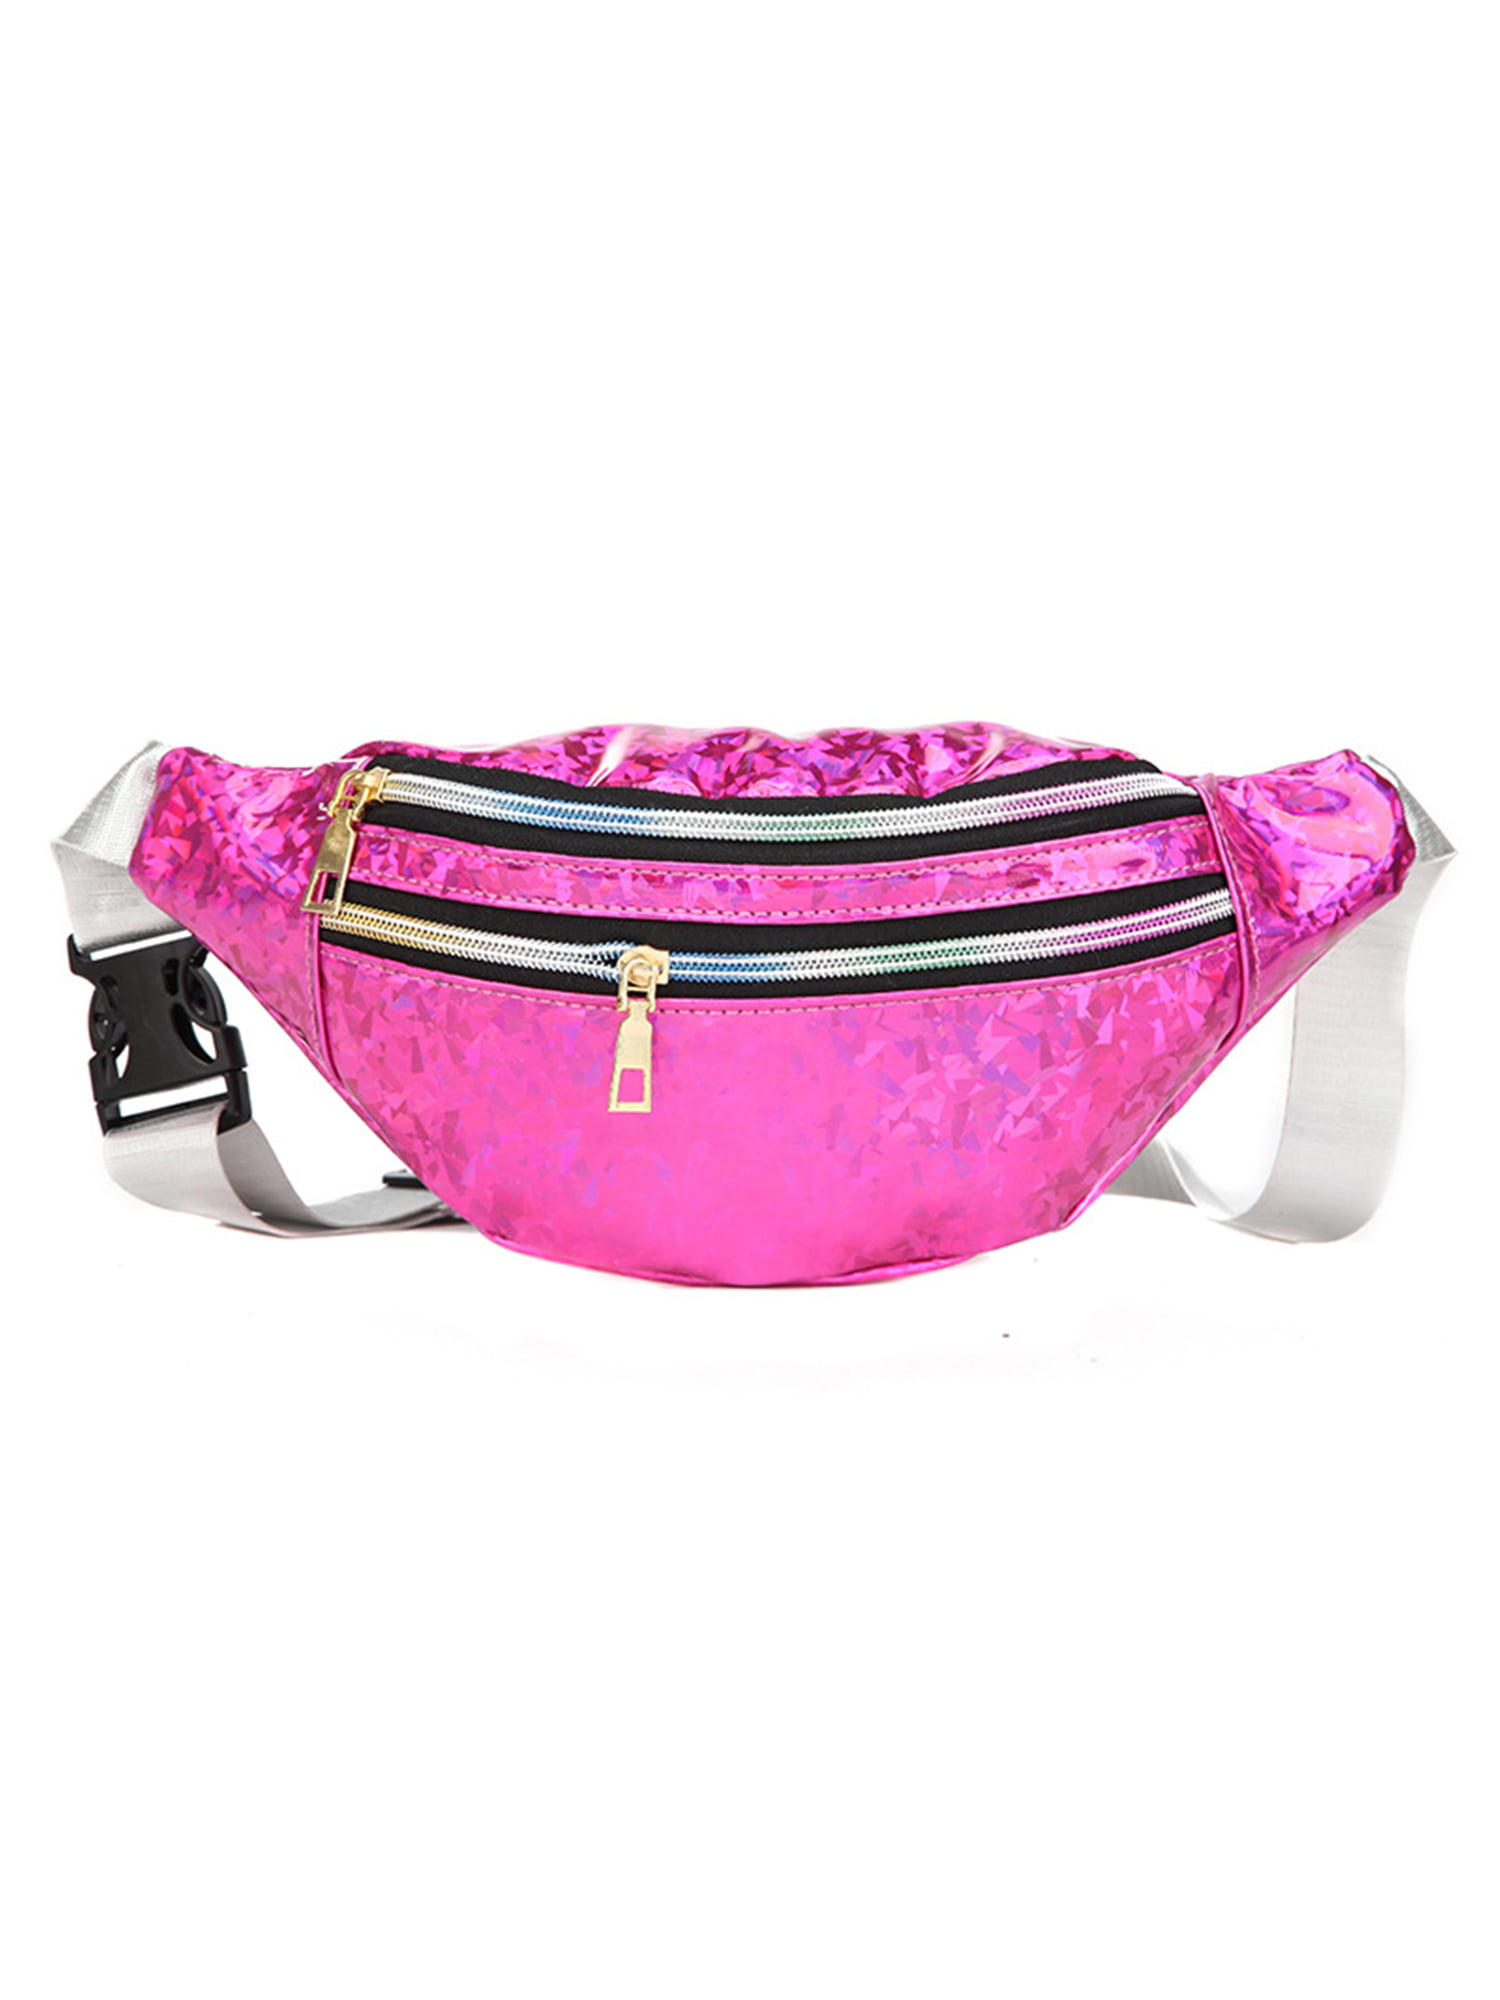 pink fanny pack waist bag womens leather hobo bag luxury fashion high  quality